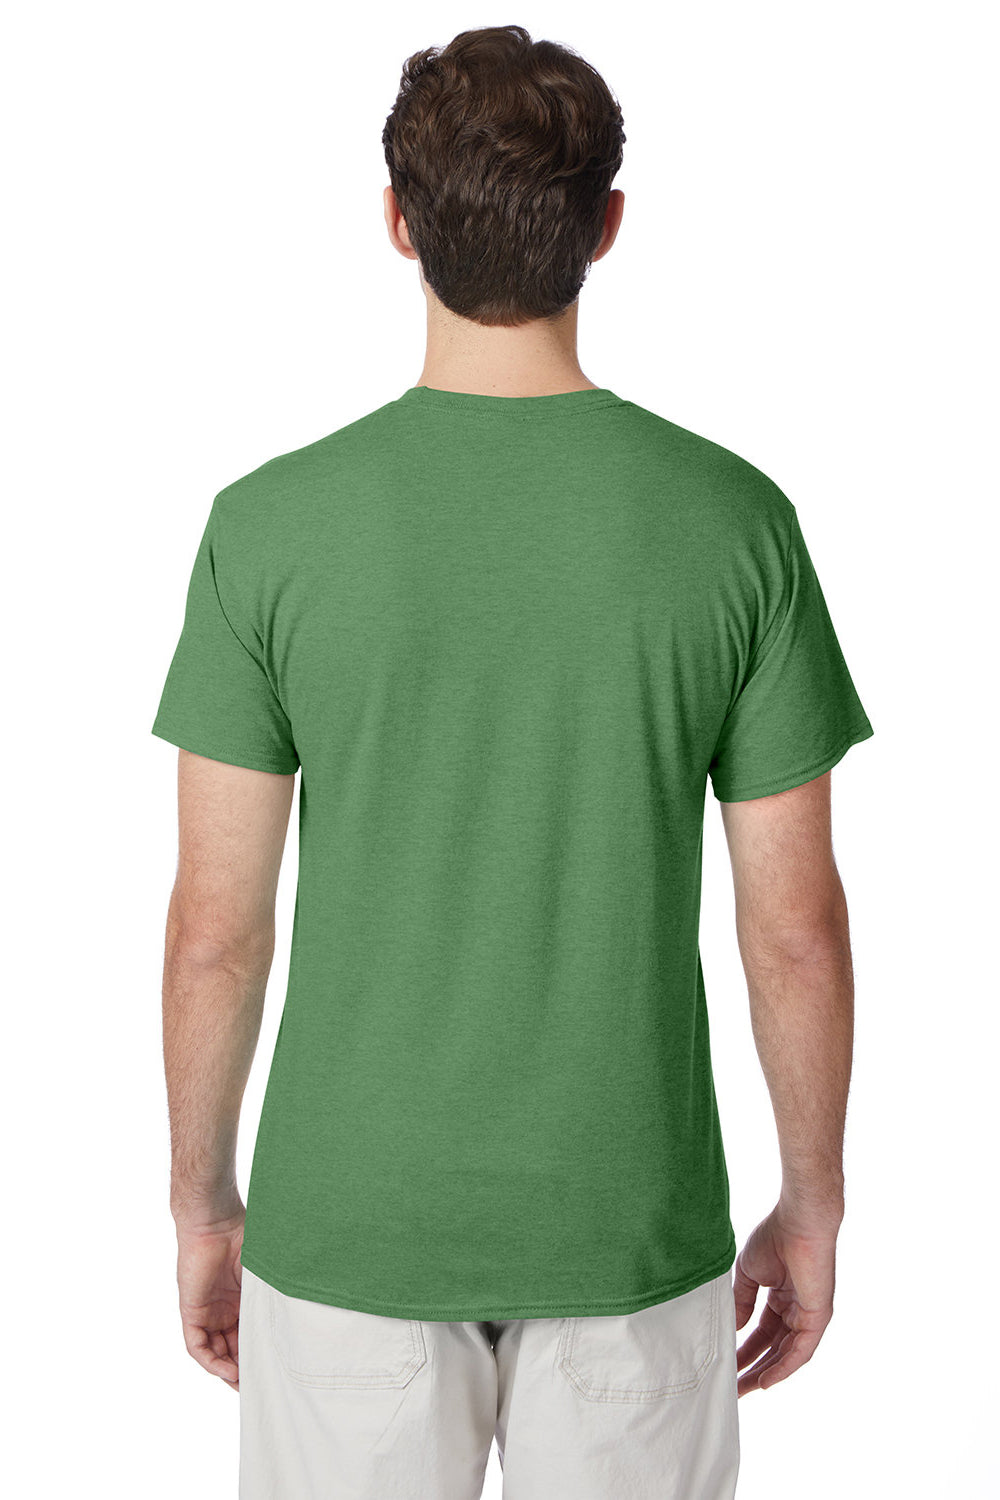 Hanes 42TB Mens X-Temp FreshIQ Moisture Wicking Short Sleeve Crewneck T-Shirt Heather True Green Back